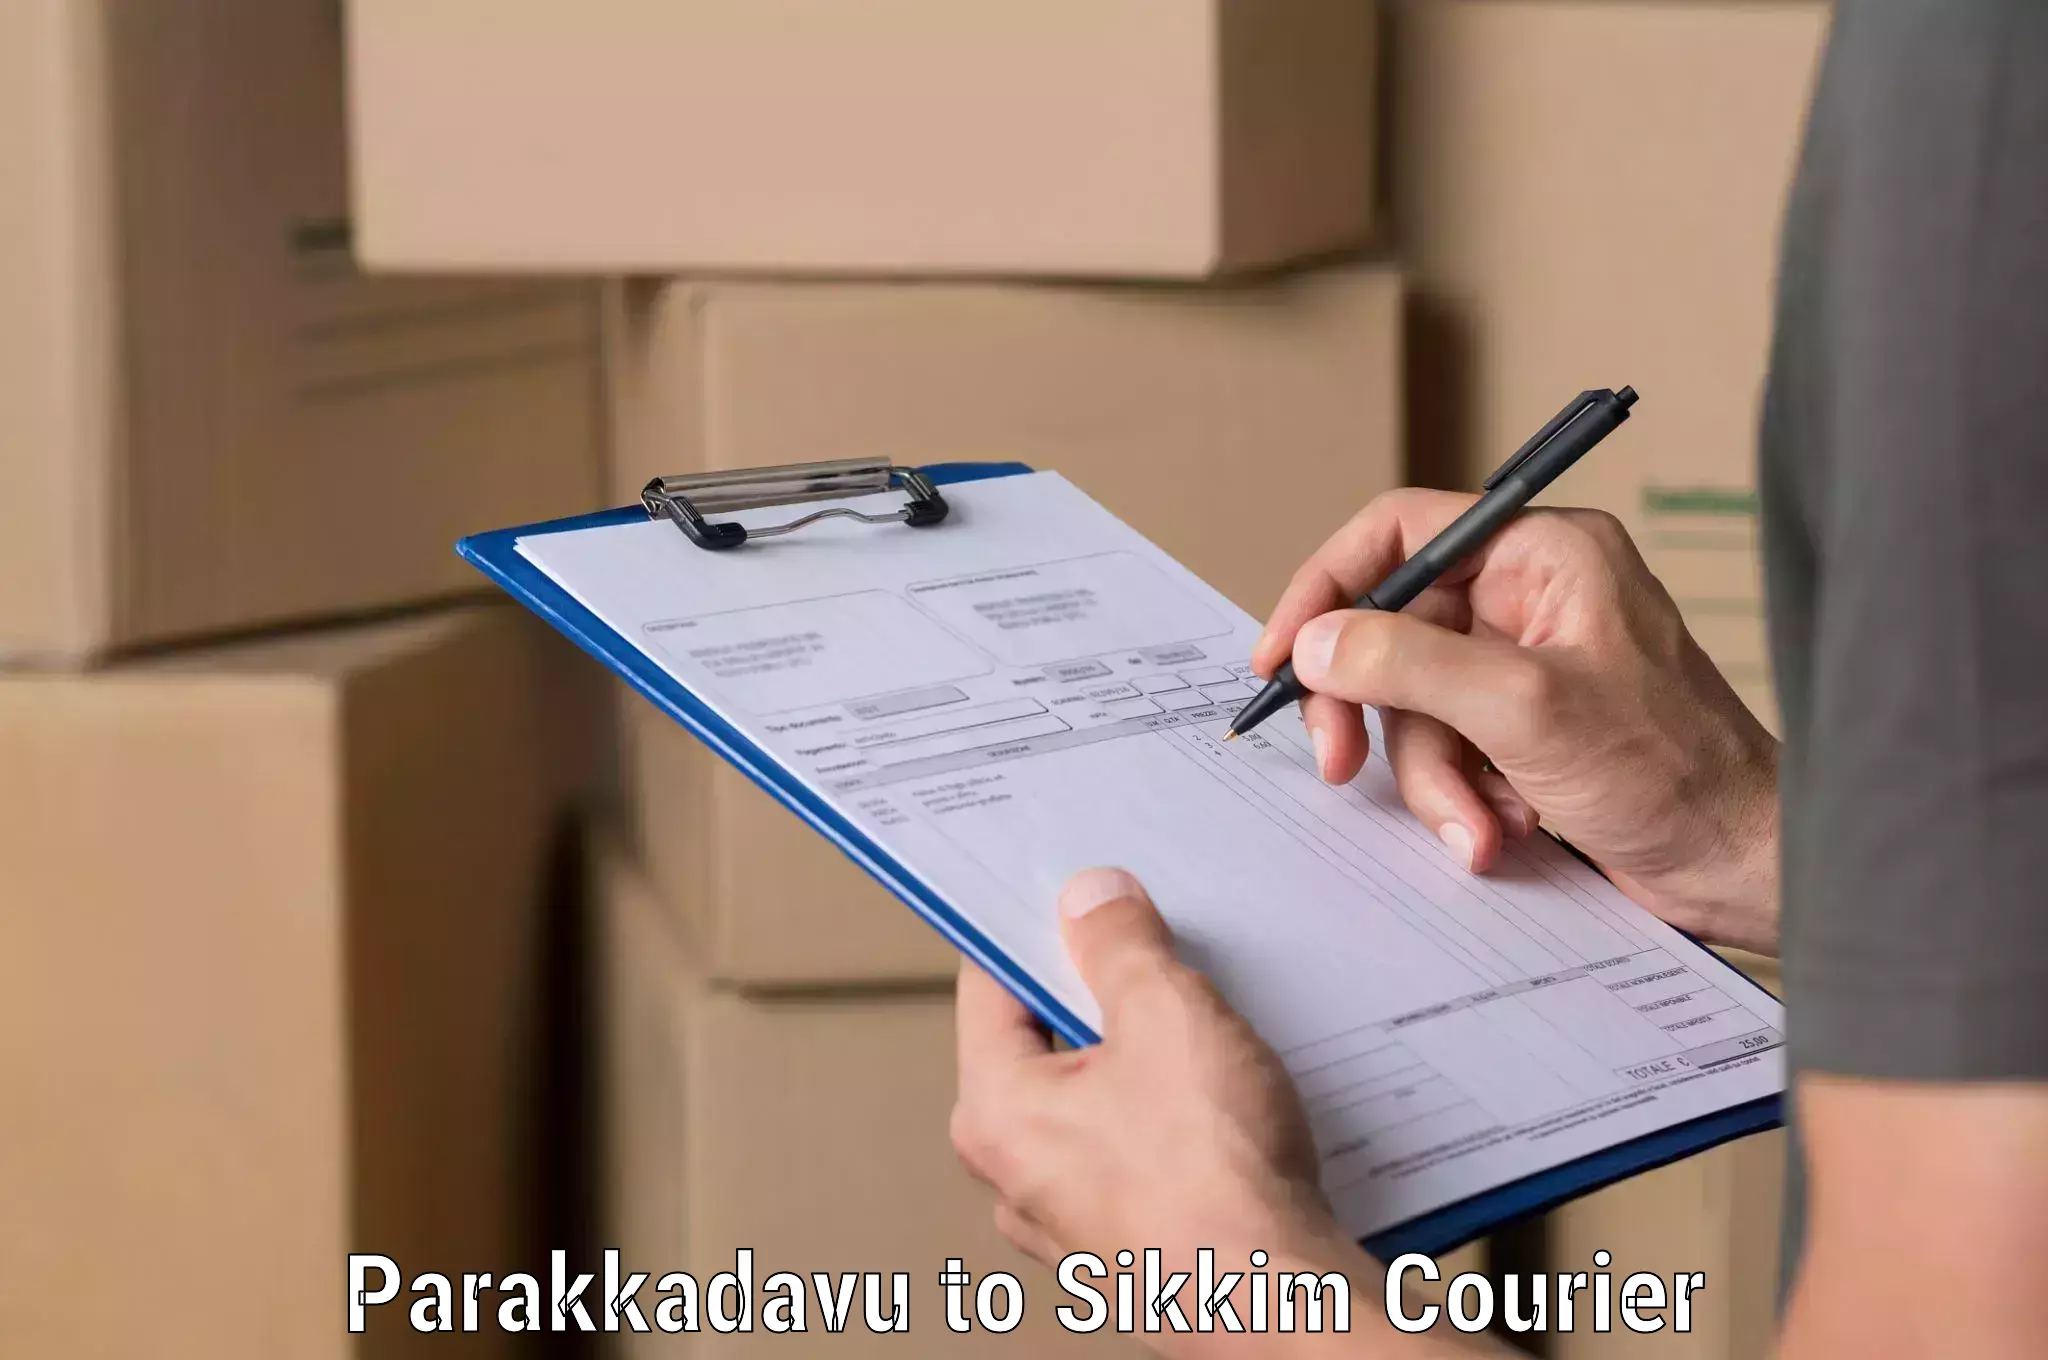 Efficient package consolidation Parakkadavu to Gangtok